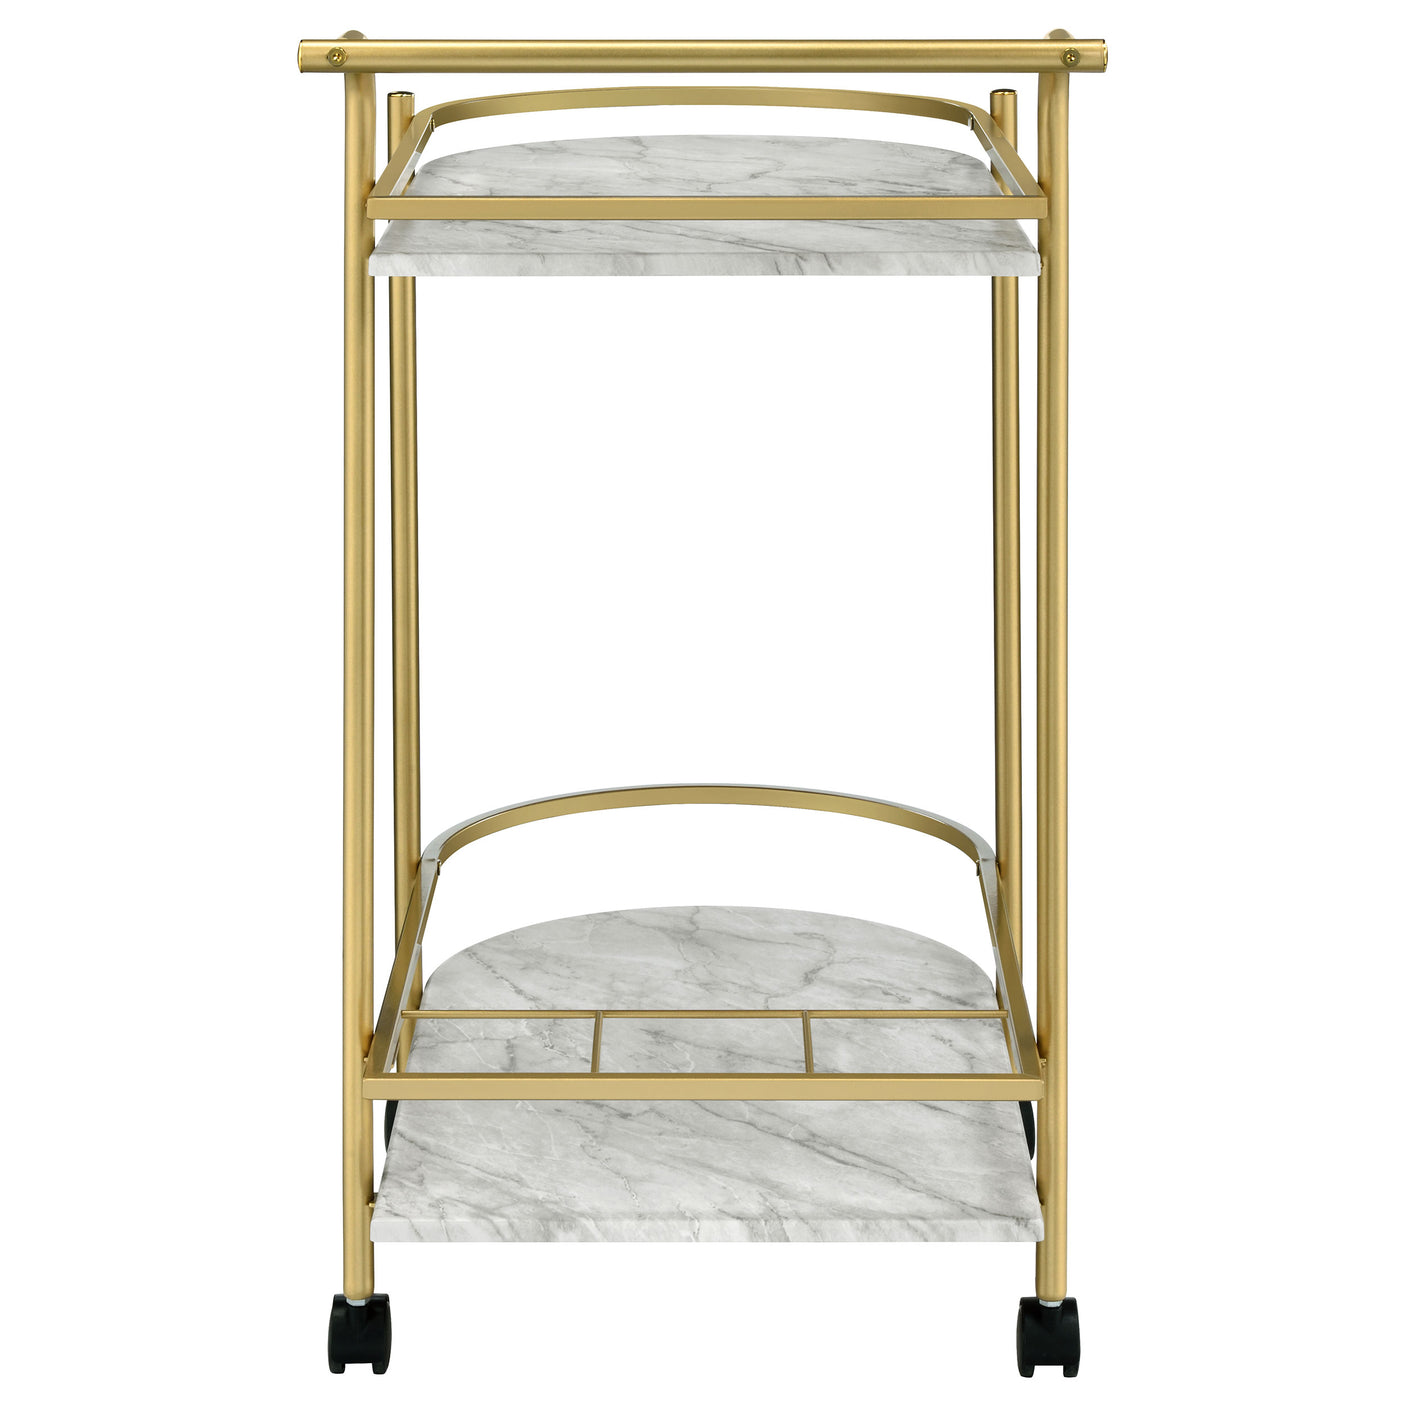 Bar Cart - Desiree 2-tier Bar Cart with Casters Gold